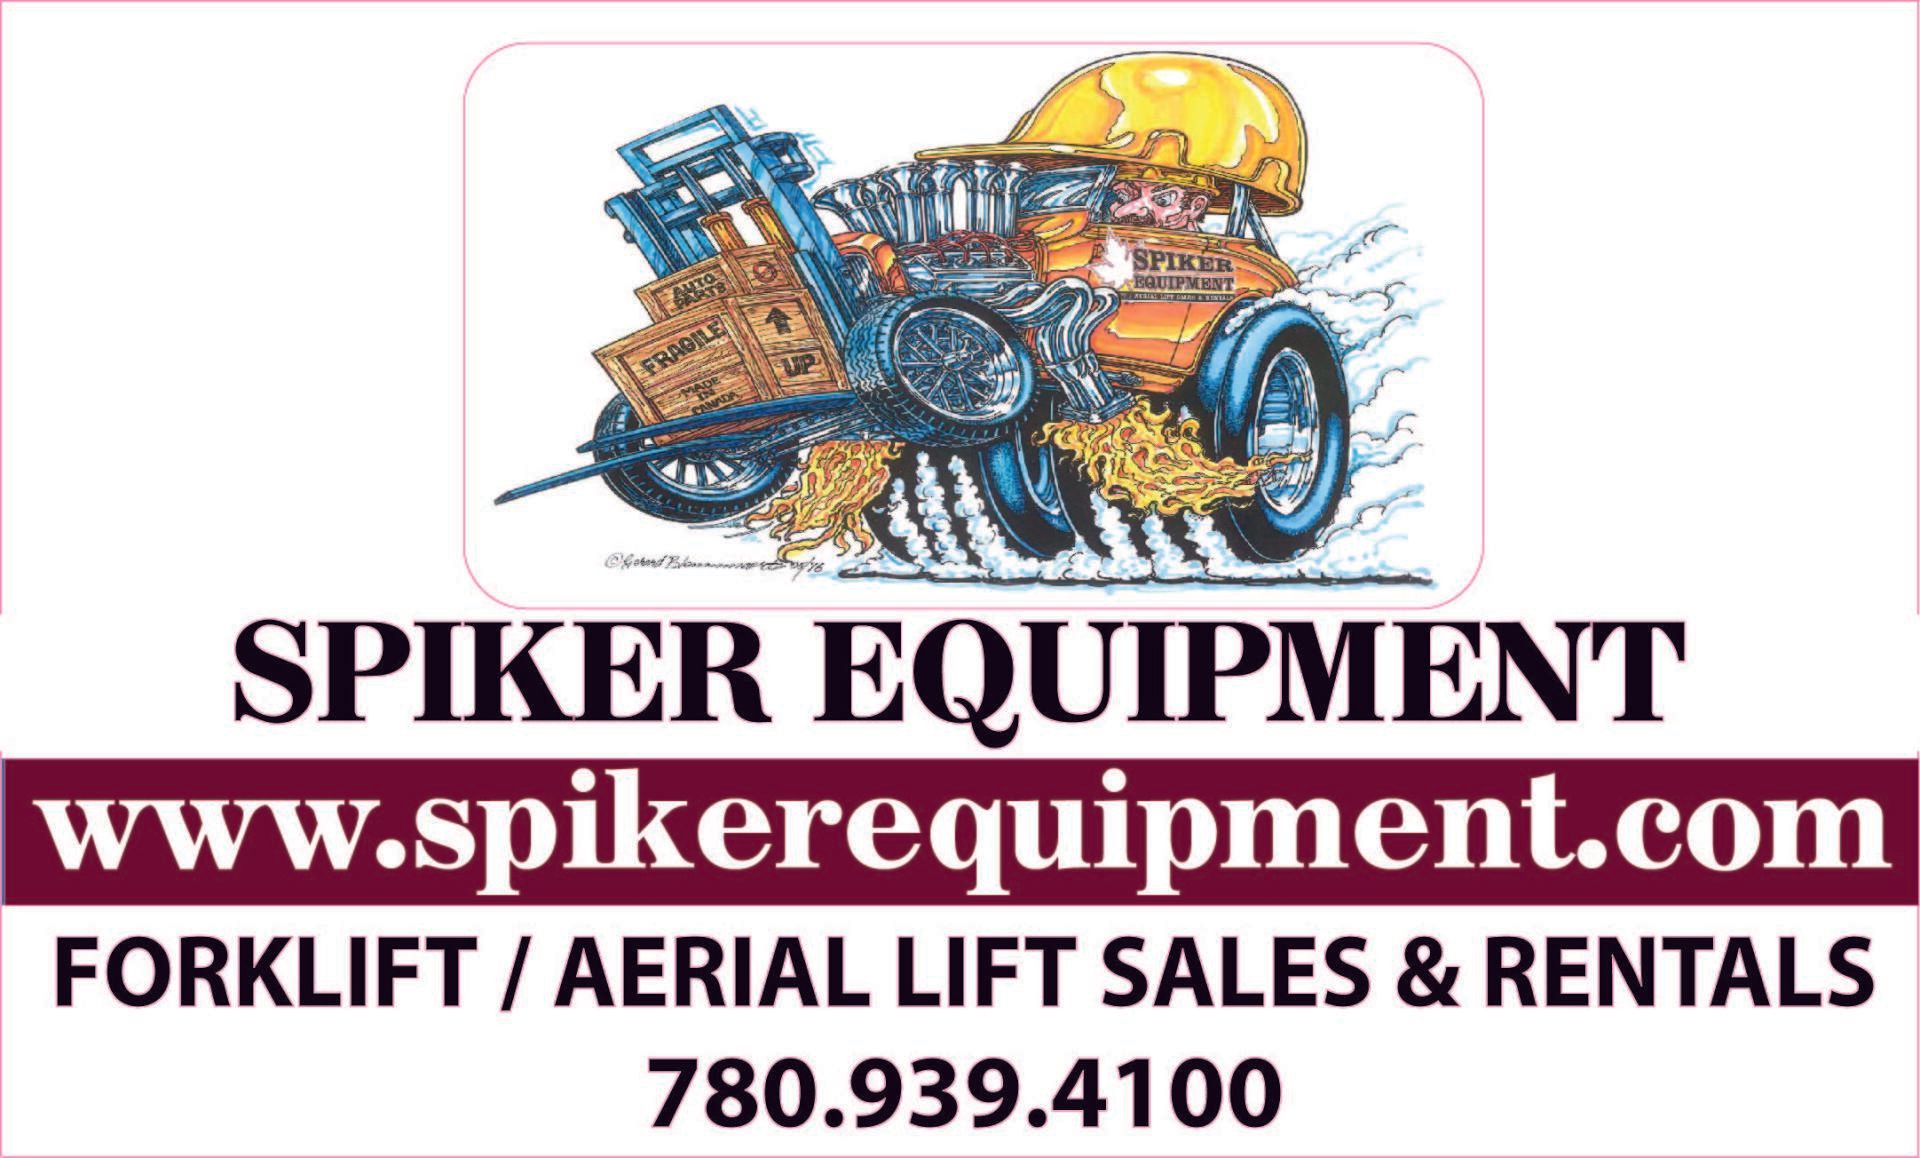 Spiker Equipment Vehicle Magnets